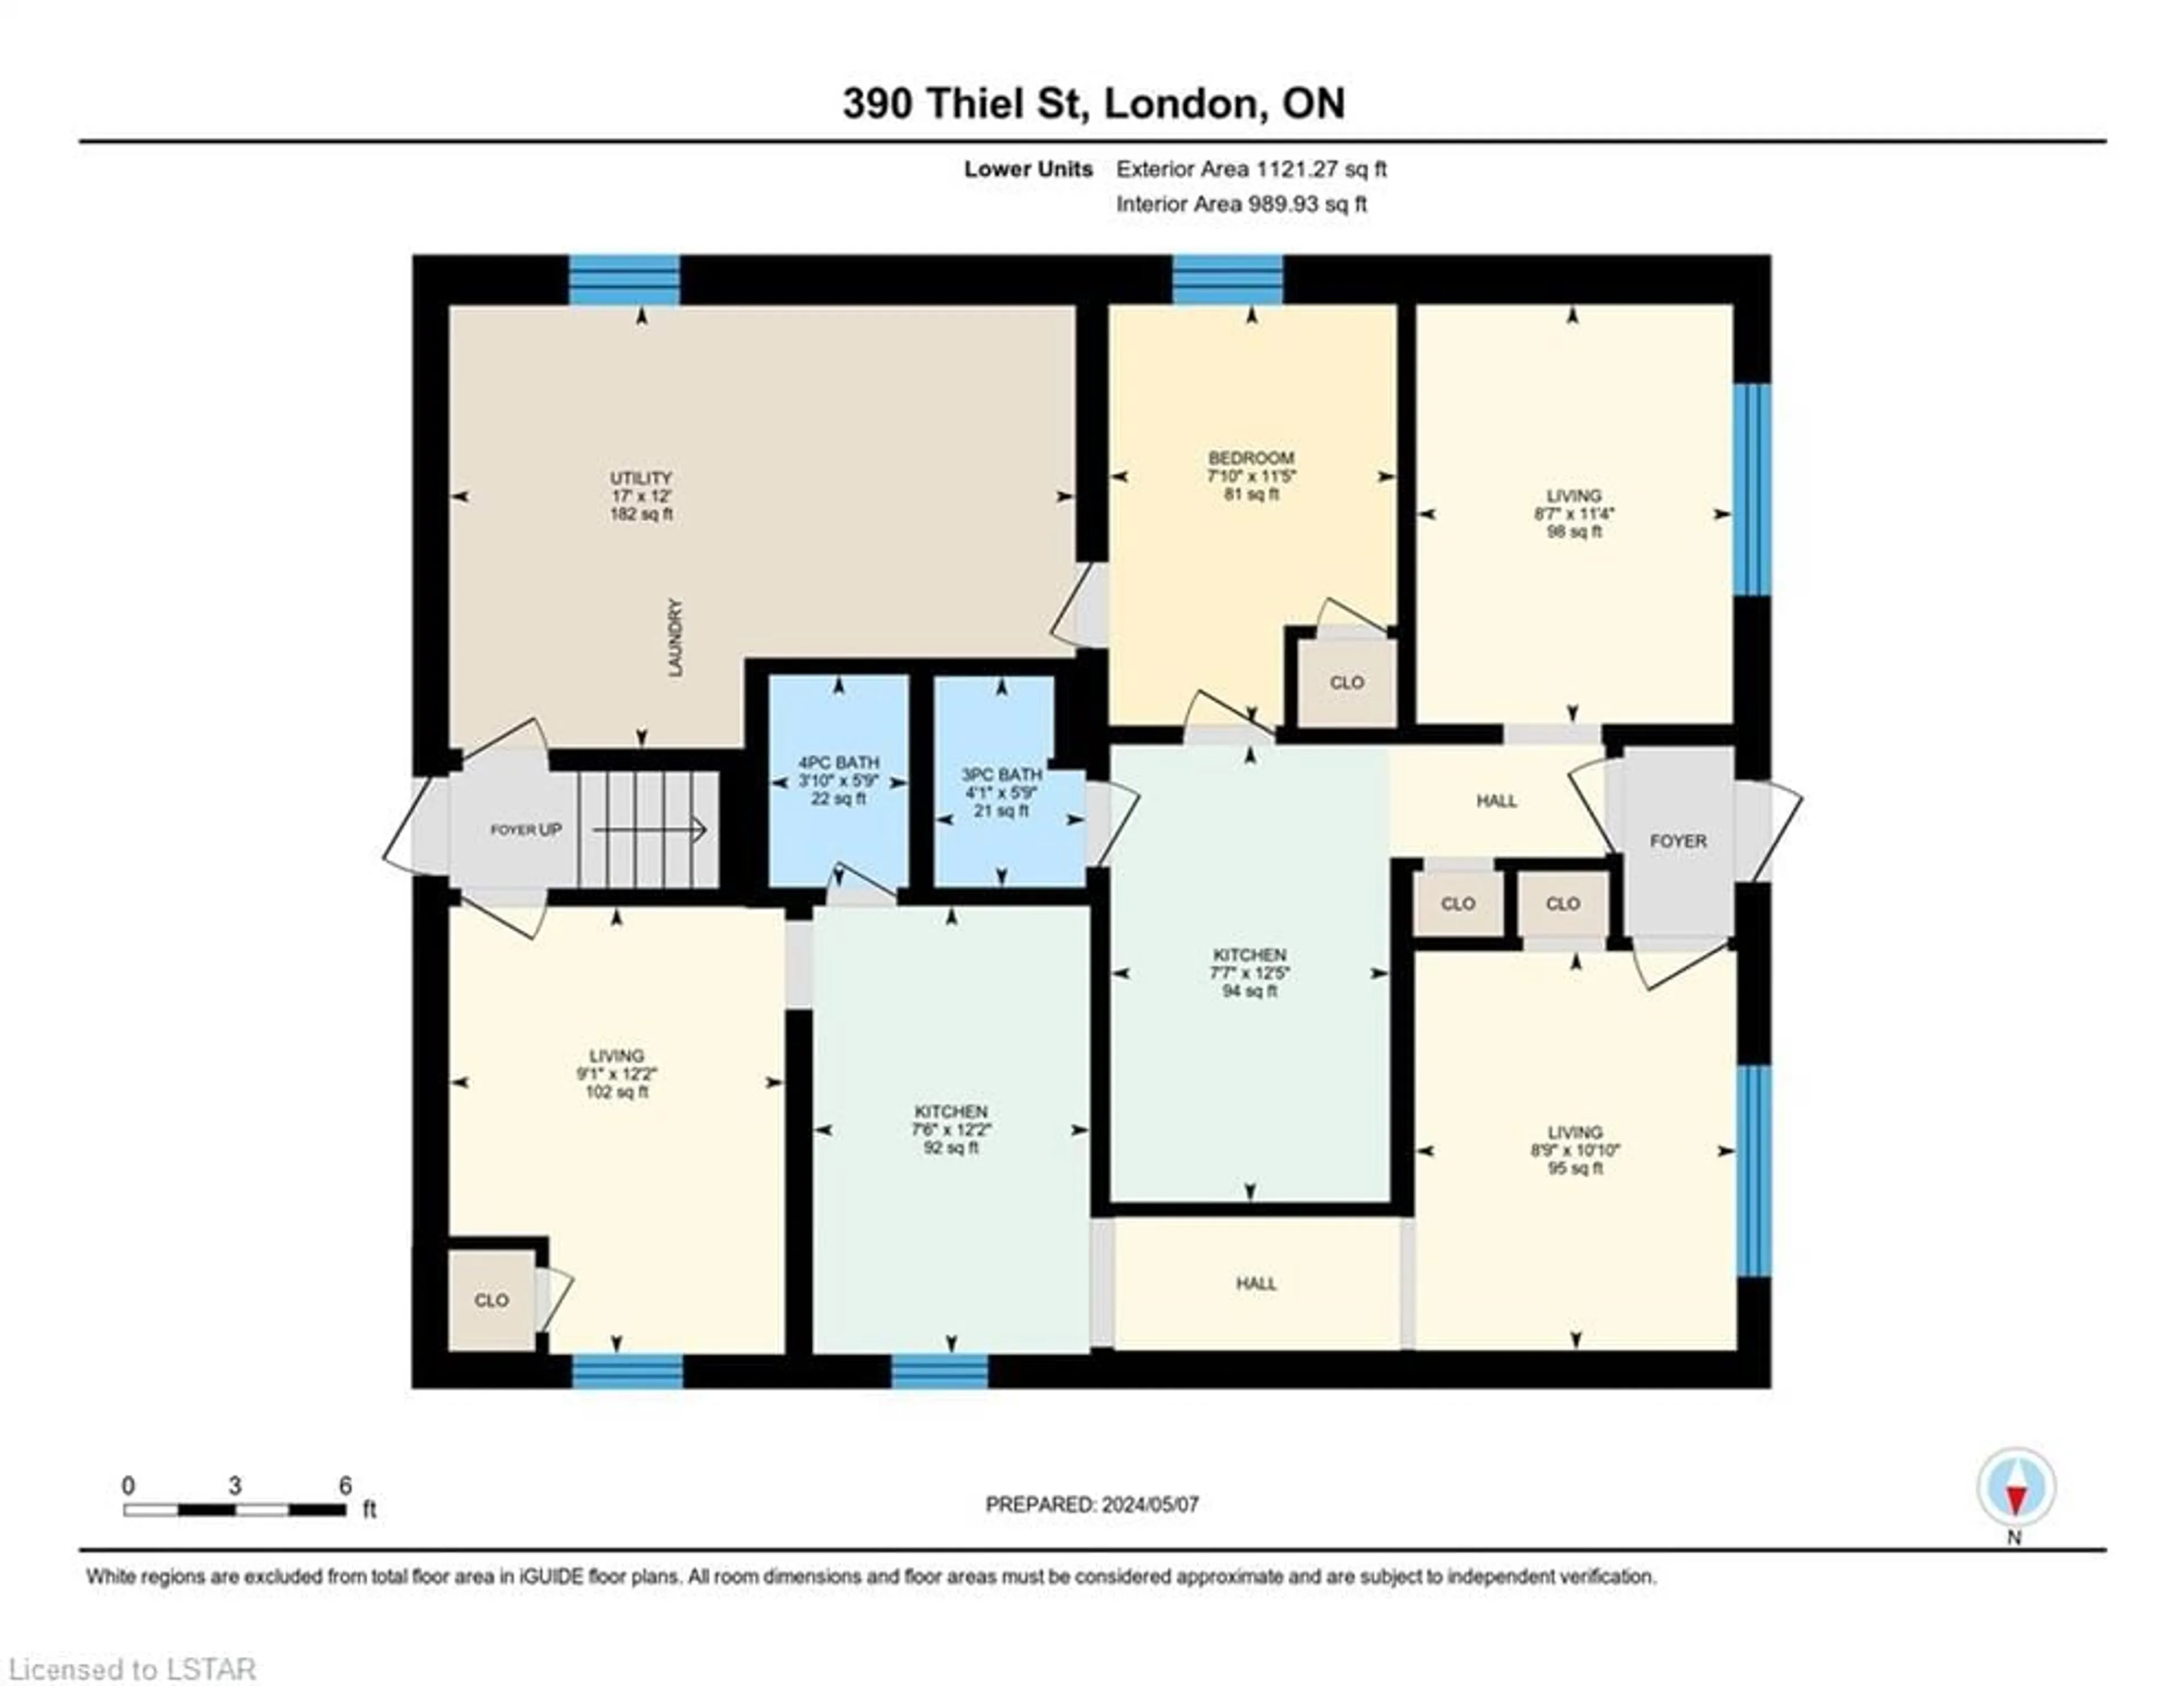 Floor plan for 390 Thiel St, London Ontario N5W 4P8